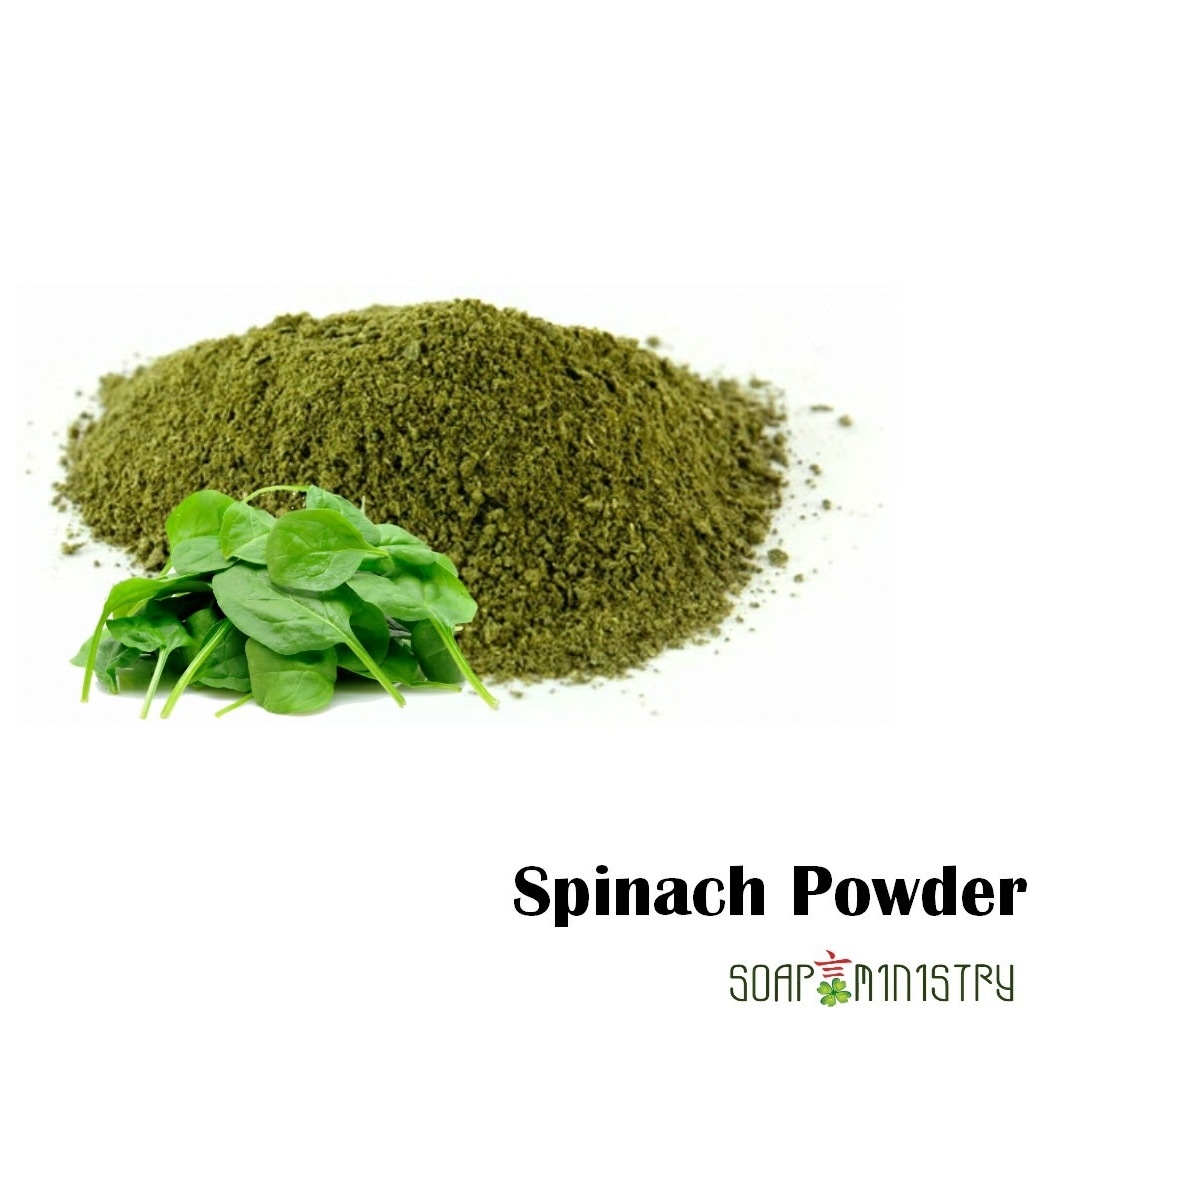 Spinach Powder 250g